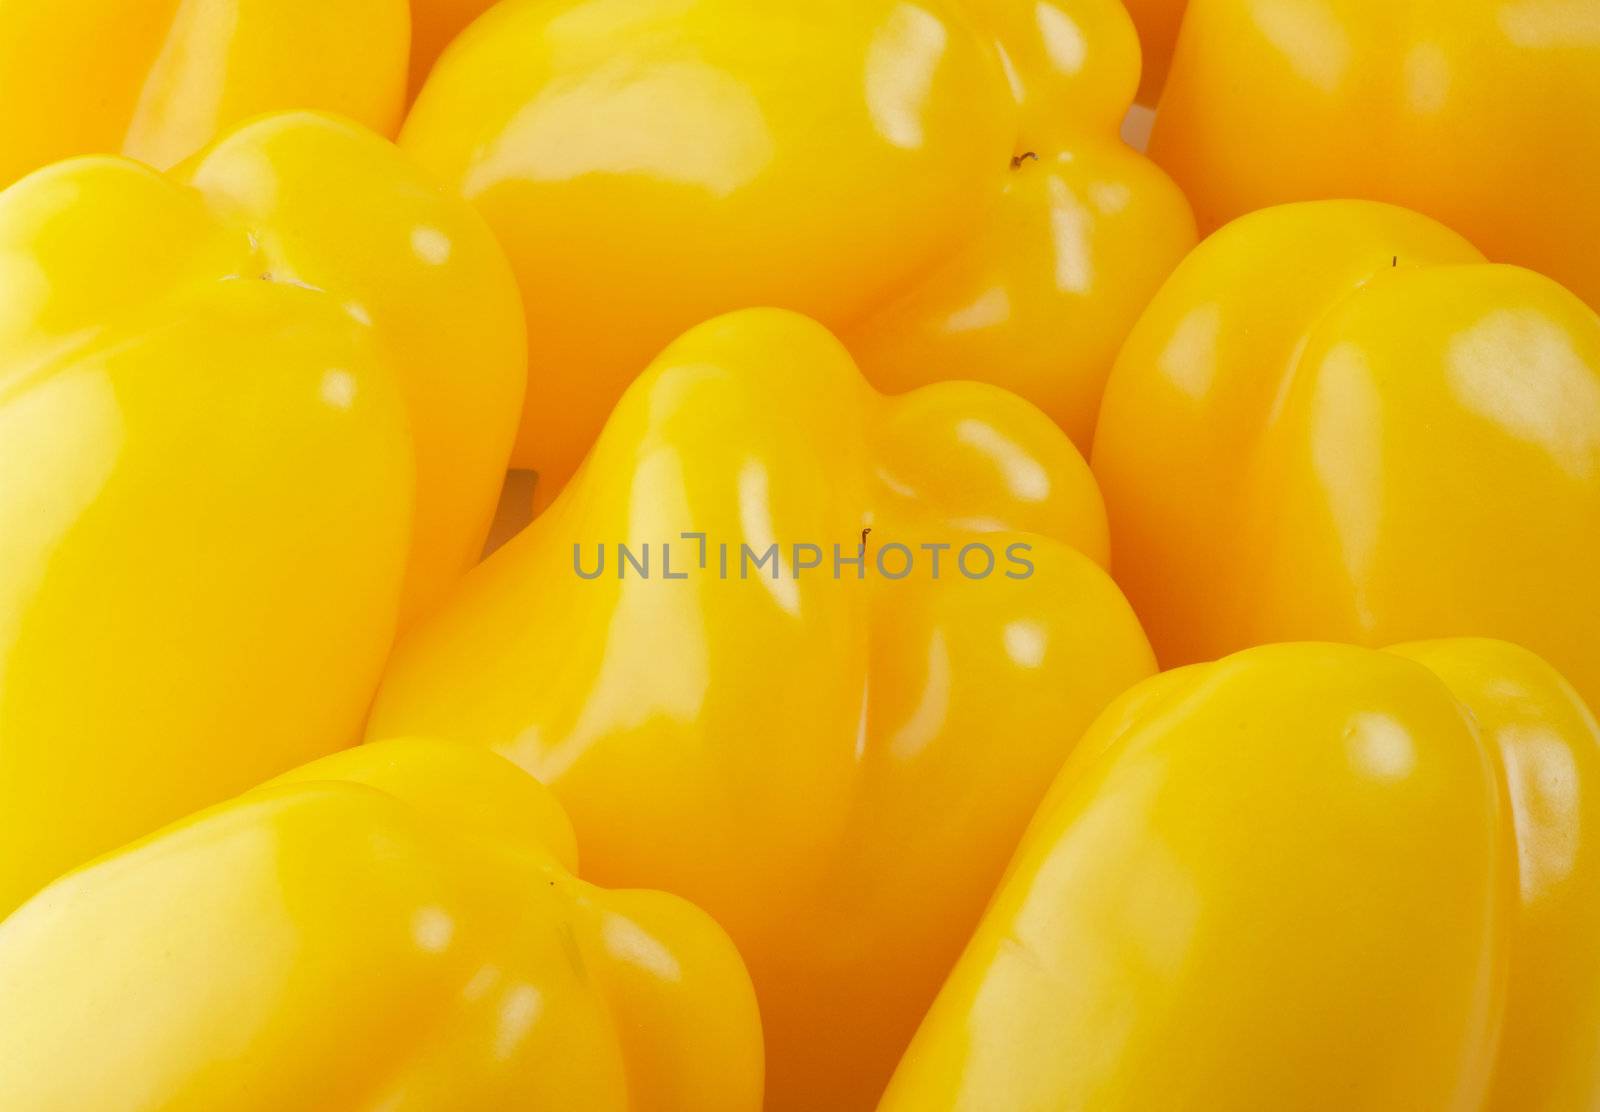 Yellow Bell Pepper background by zhekos